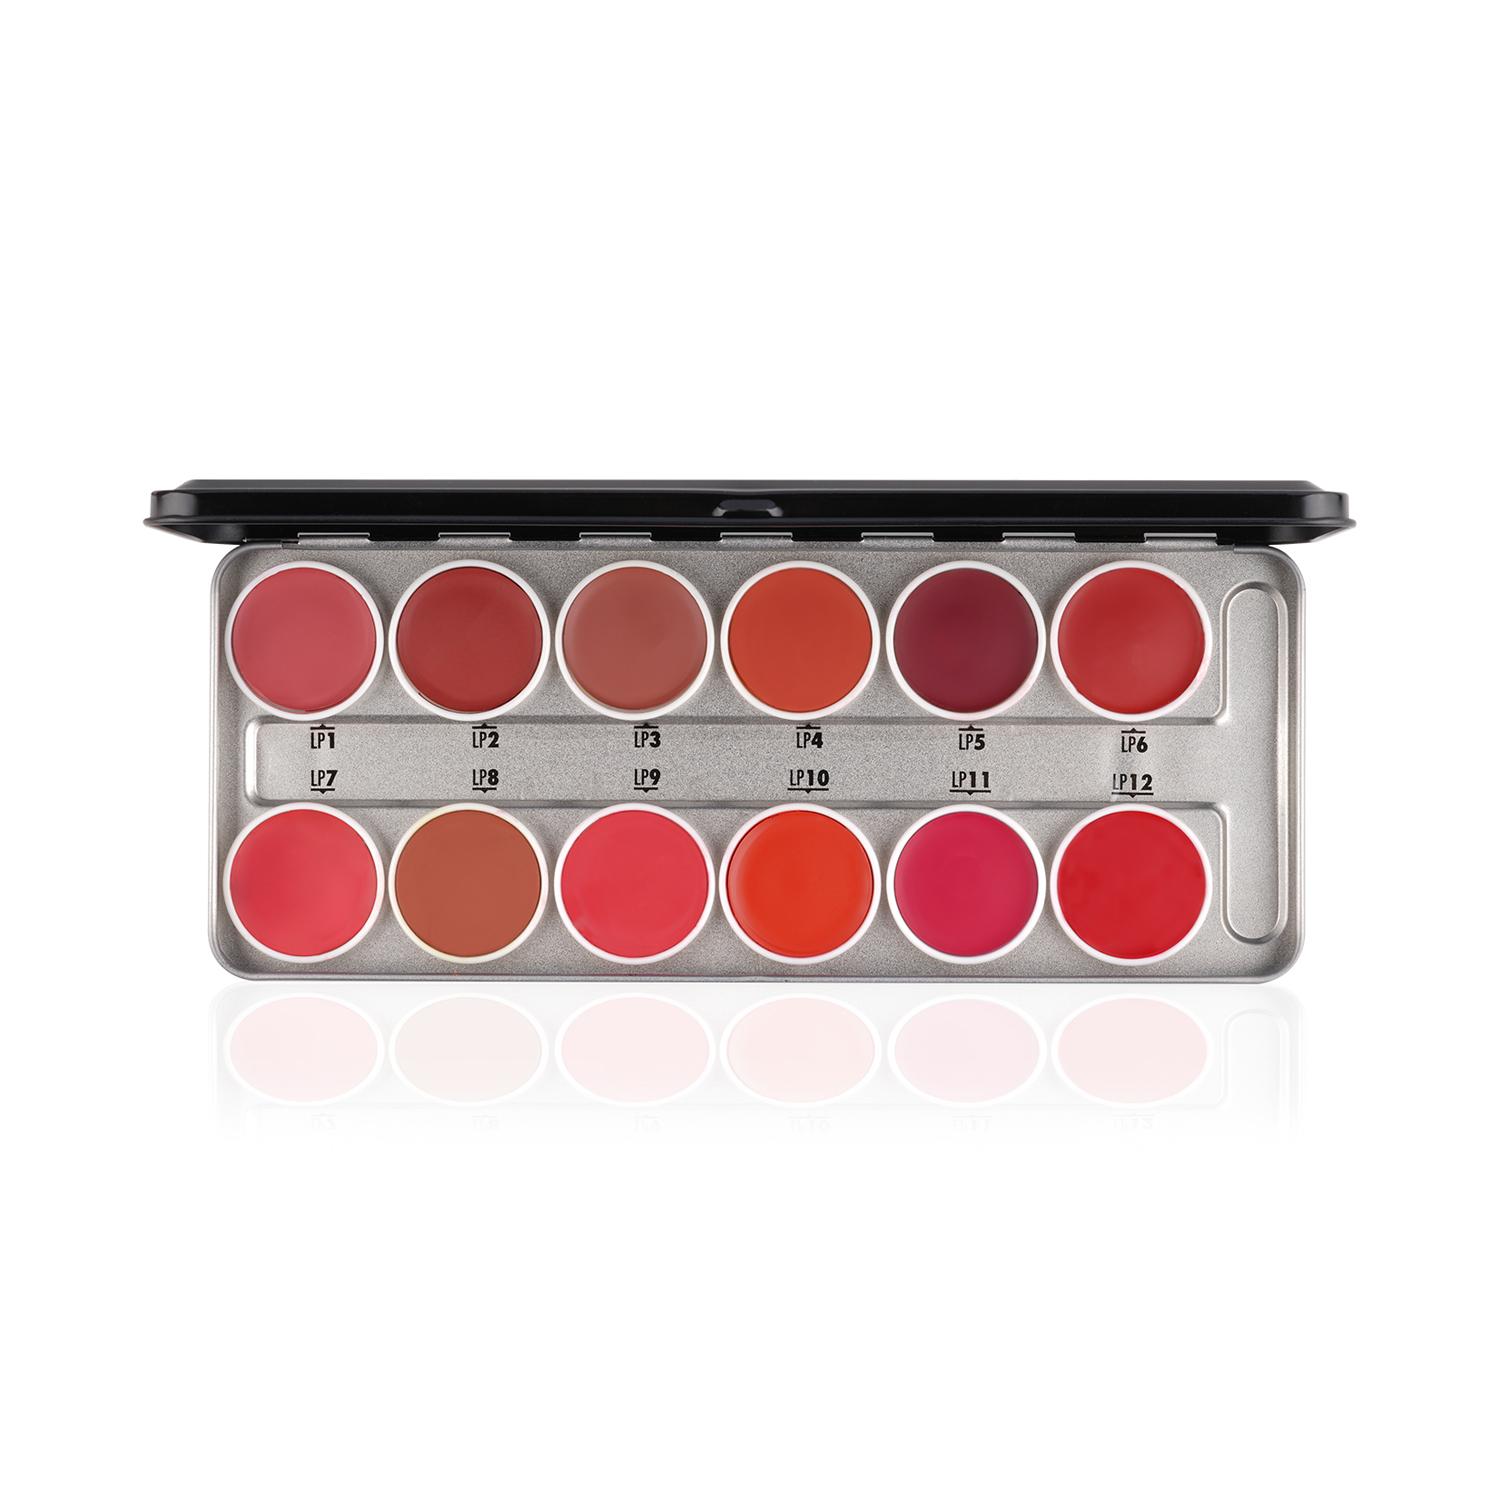 PAC Pro Lipstick Palette - X12 Shade (2.8g)